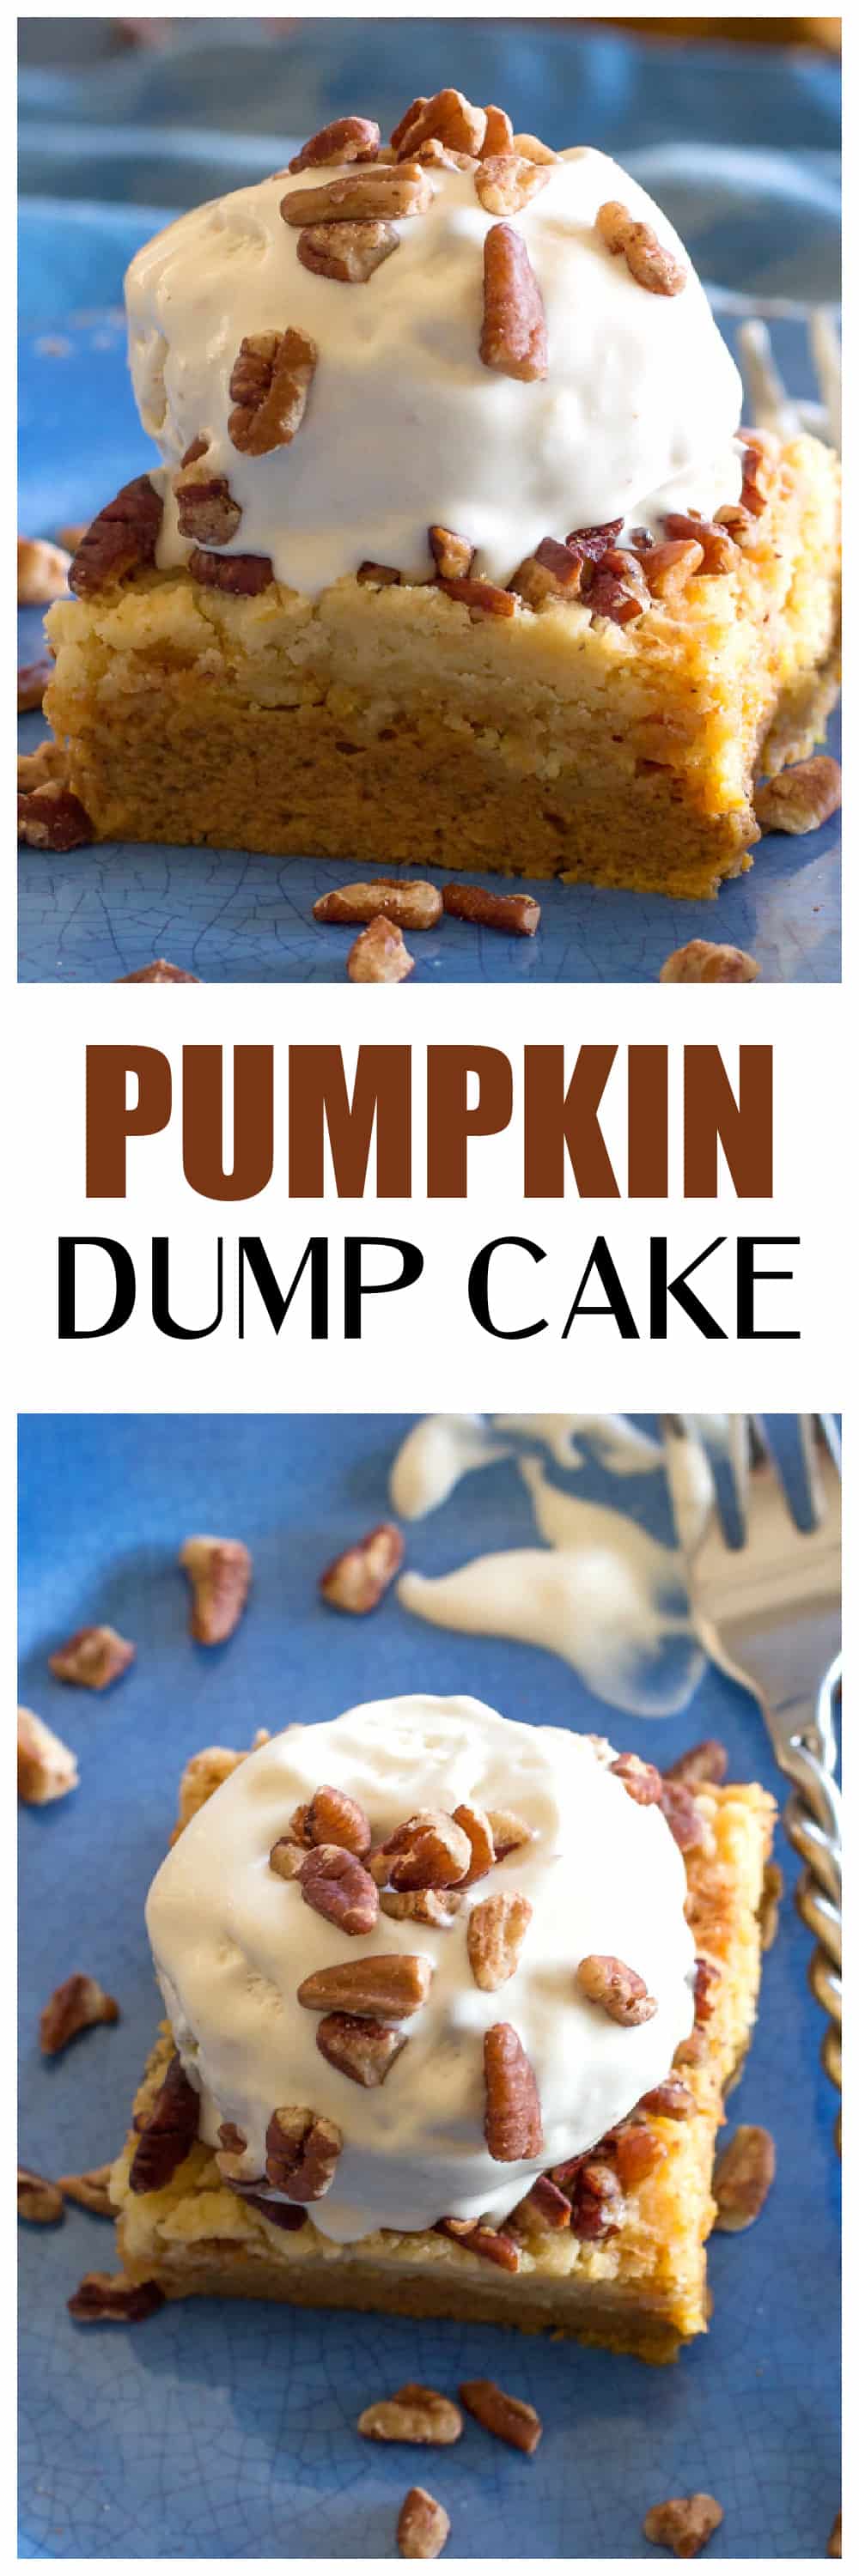 Pumpkin Dump Cake | The Girl Who Ate Everything